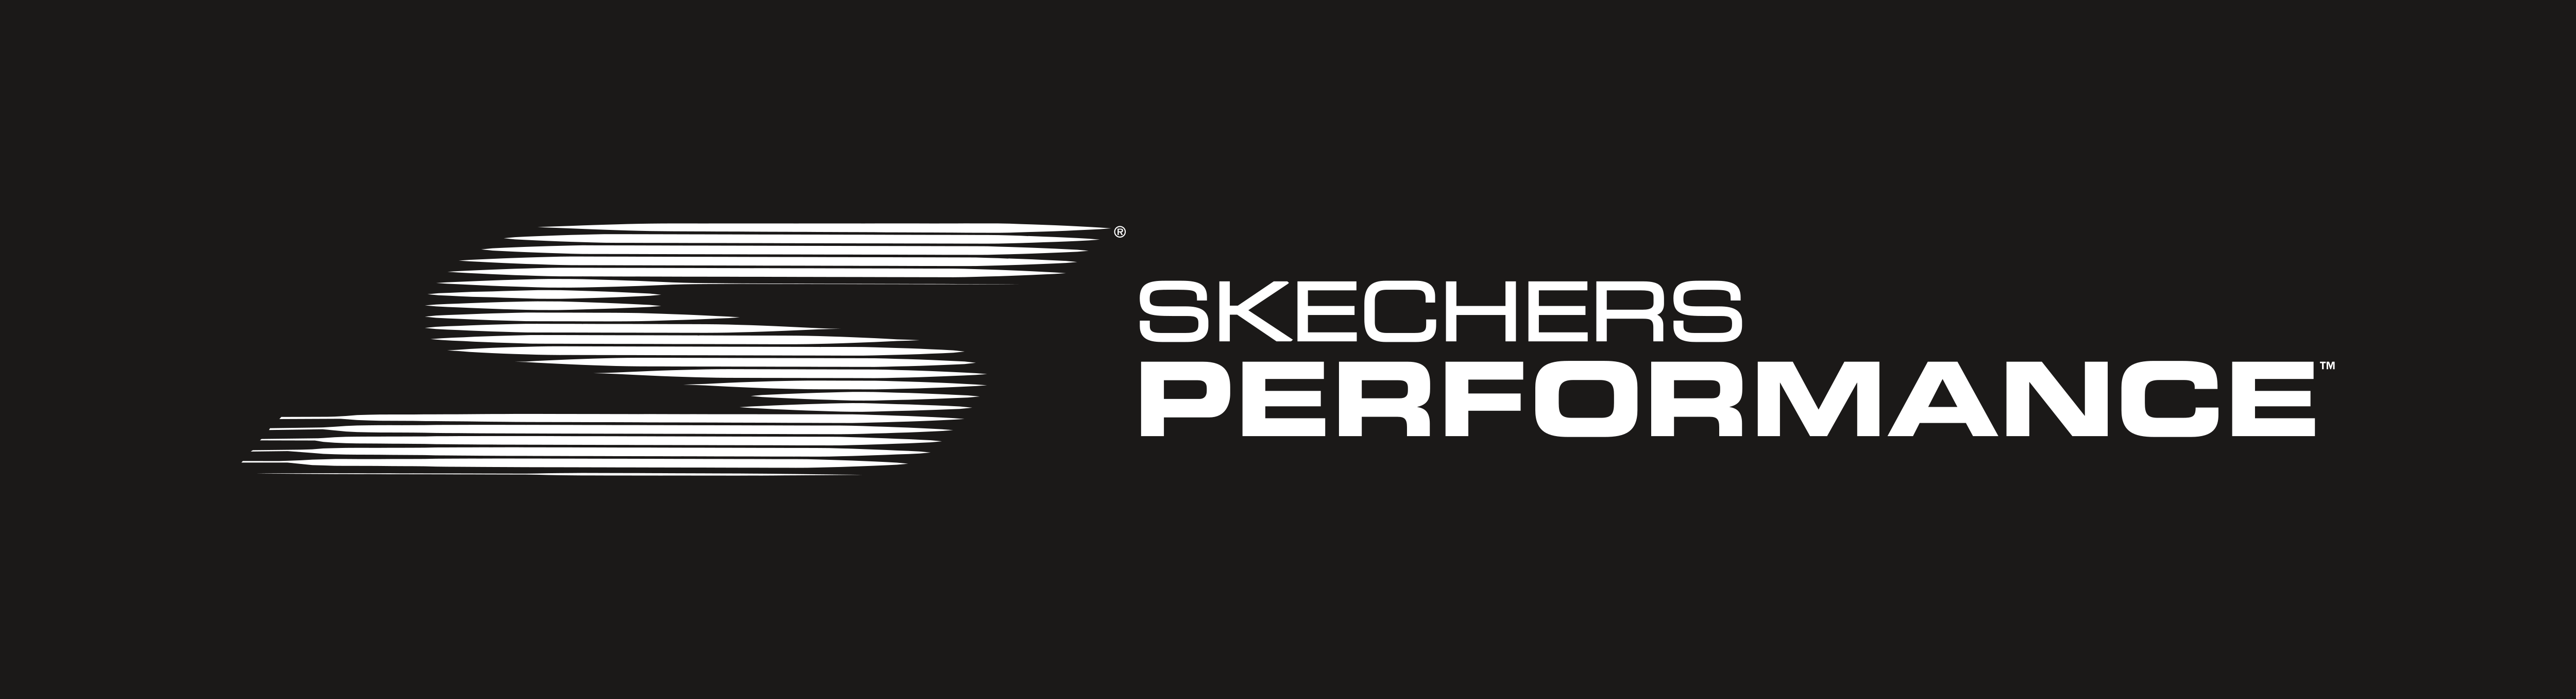 Skechers Performance Logo Vector, Buy Now, Hotsell, 57% www.busformentera.com